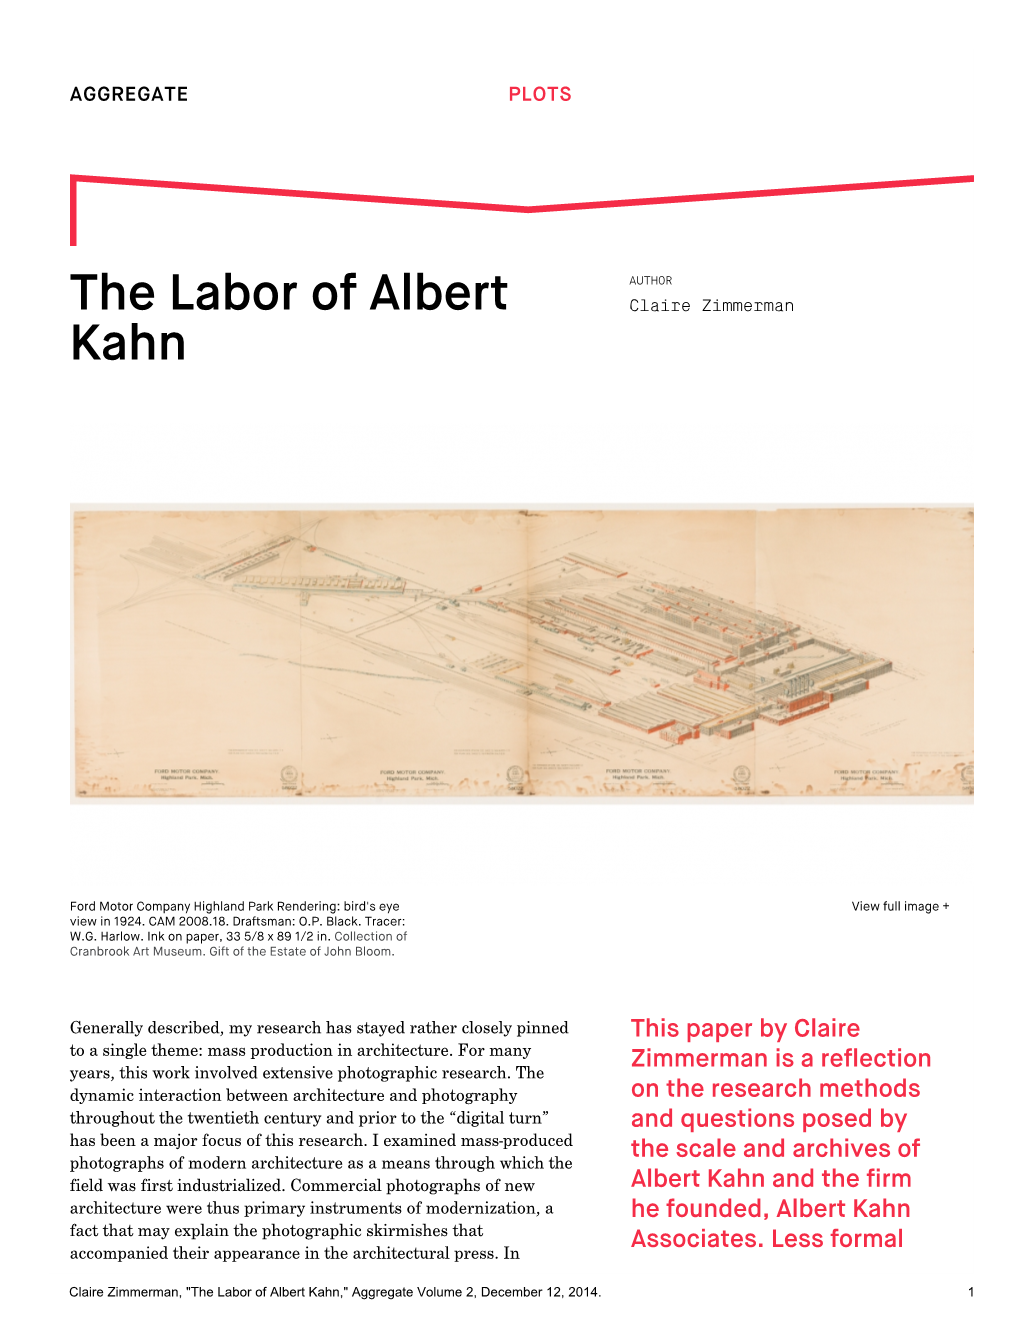 The Labor of Albert Kahn," Aggregate Volume 2, December 12, 2014